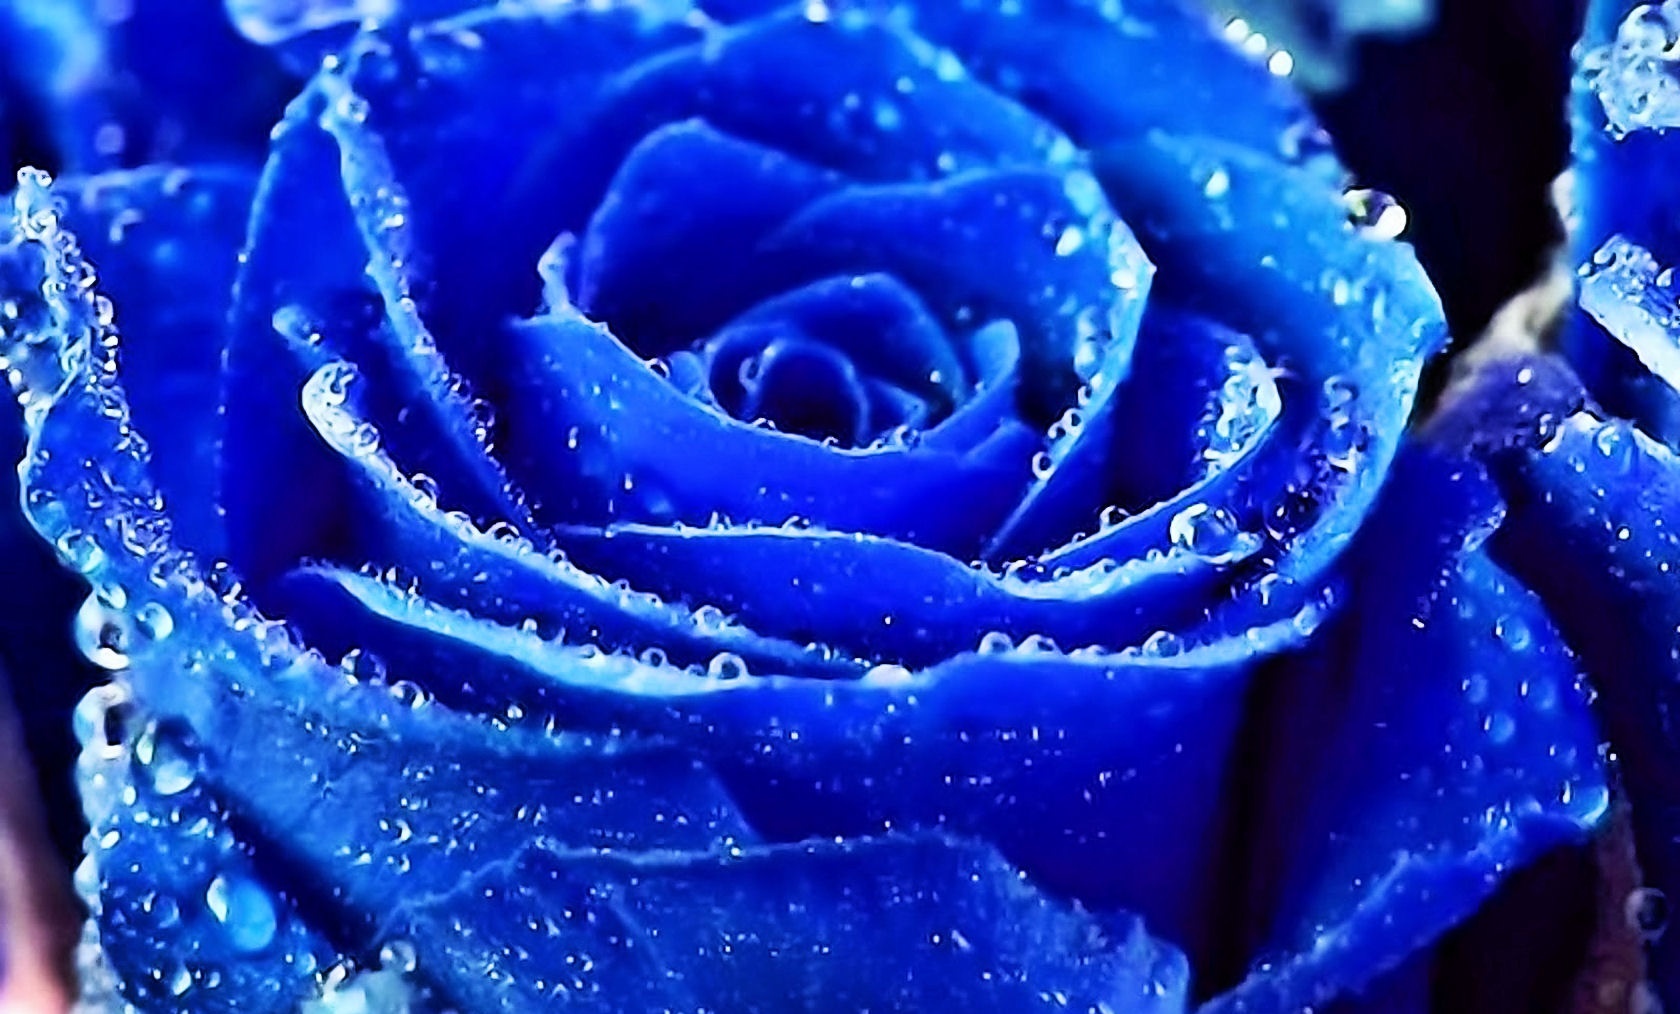 Blue Rose Wallpaper Hd Mobile - Shardiff World